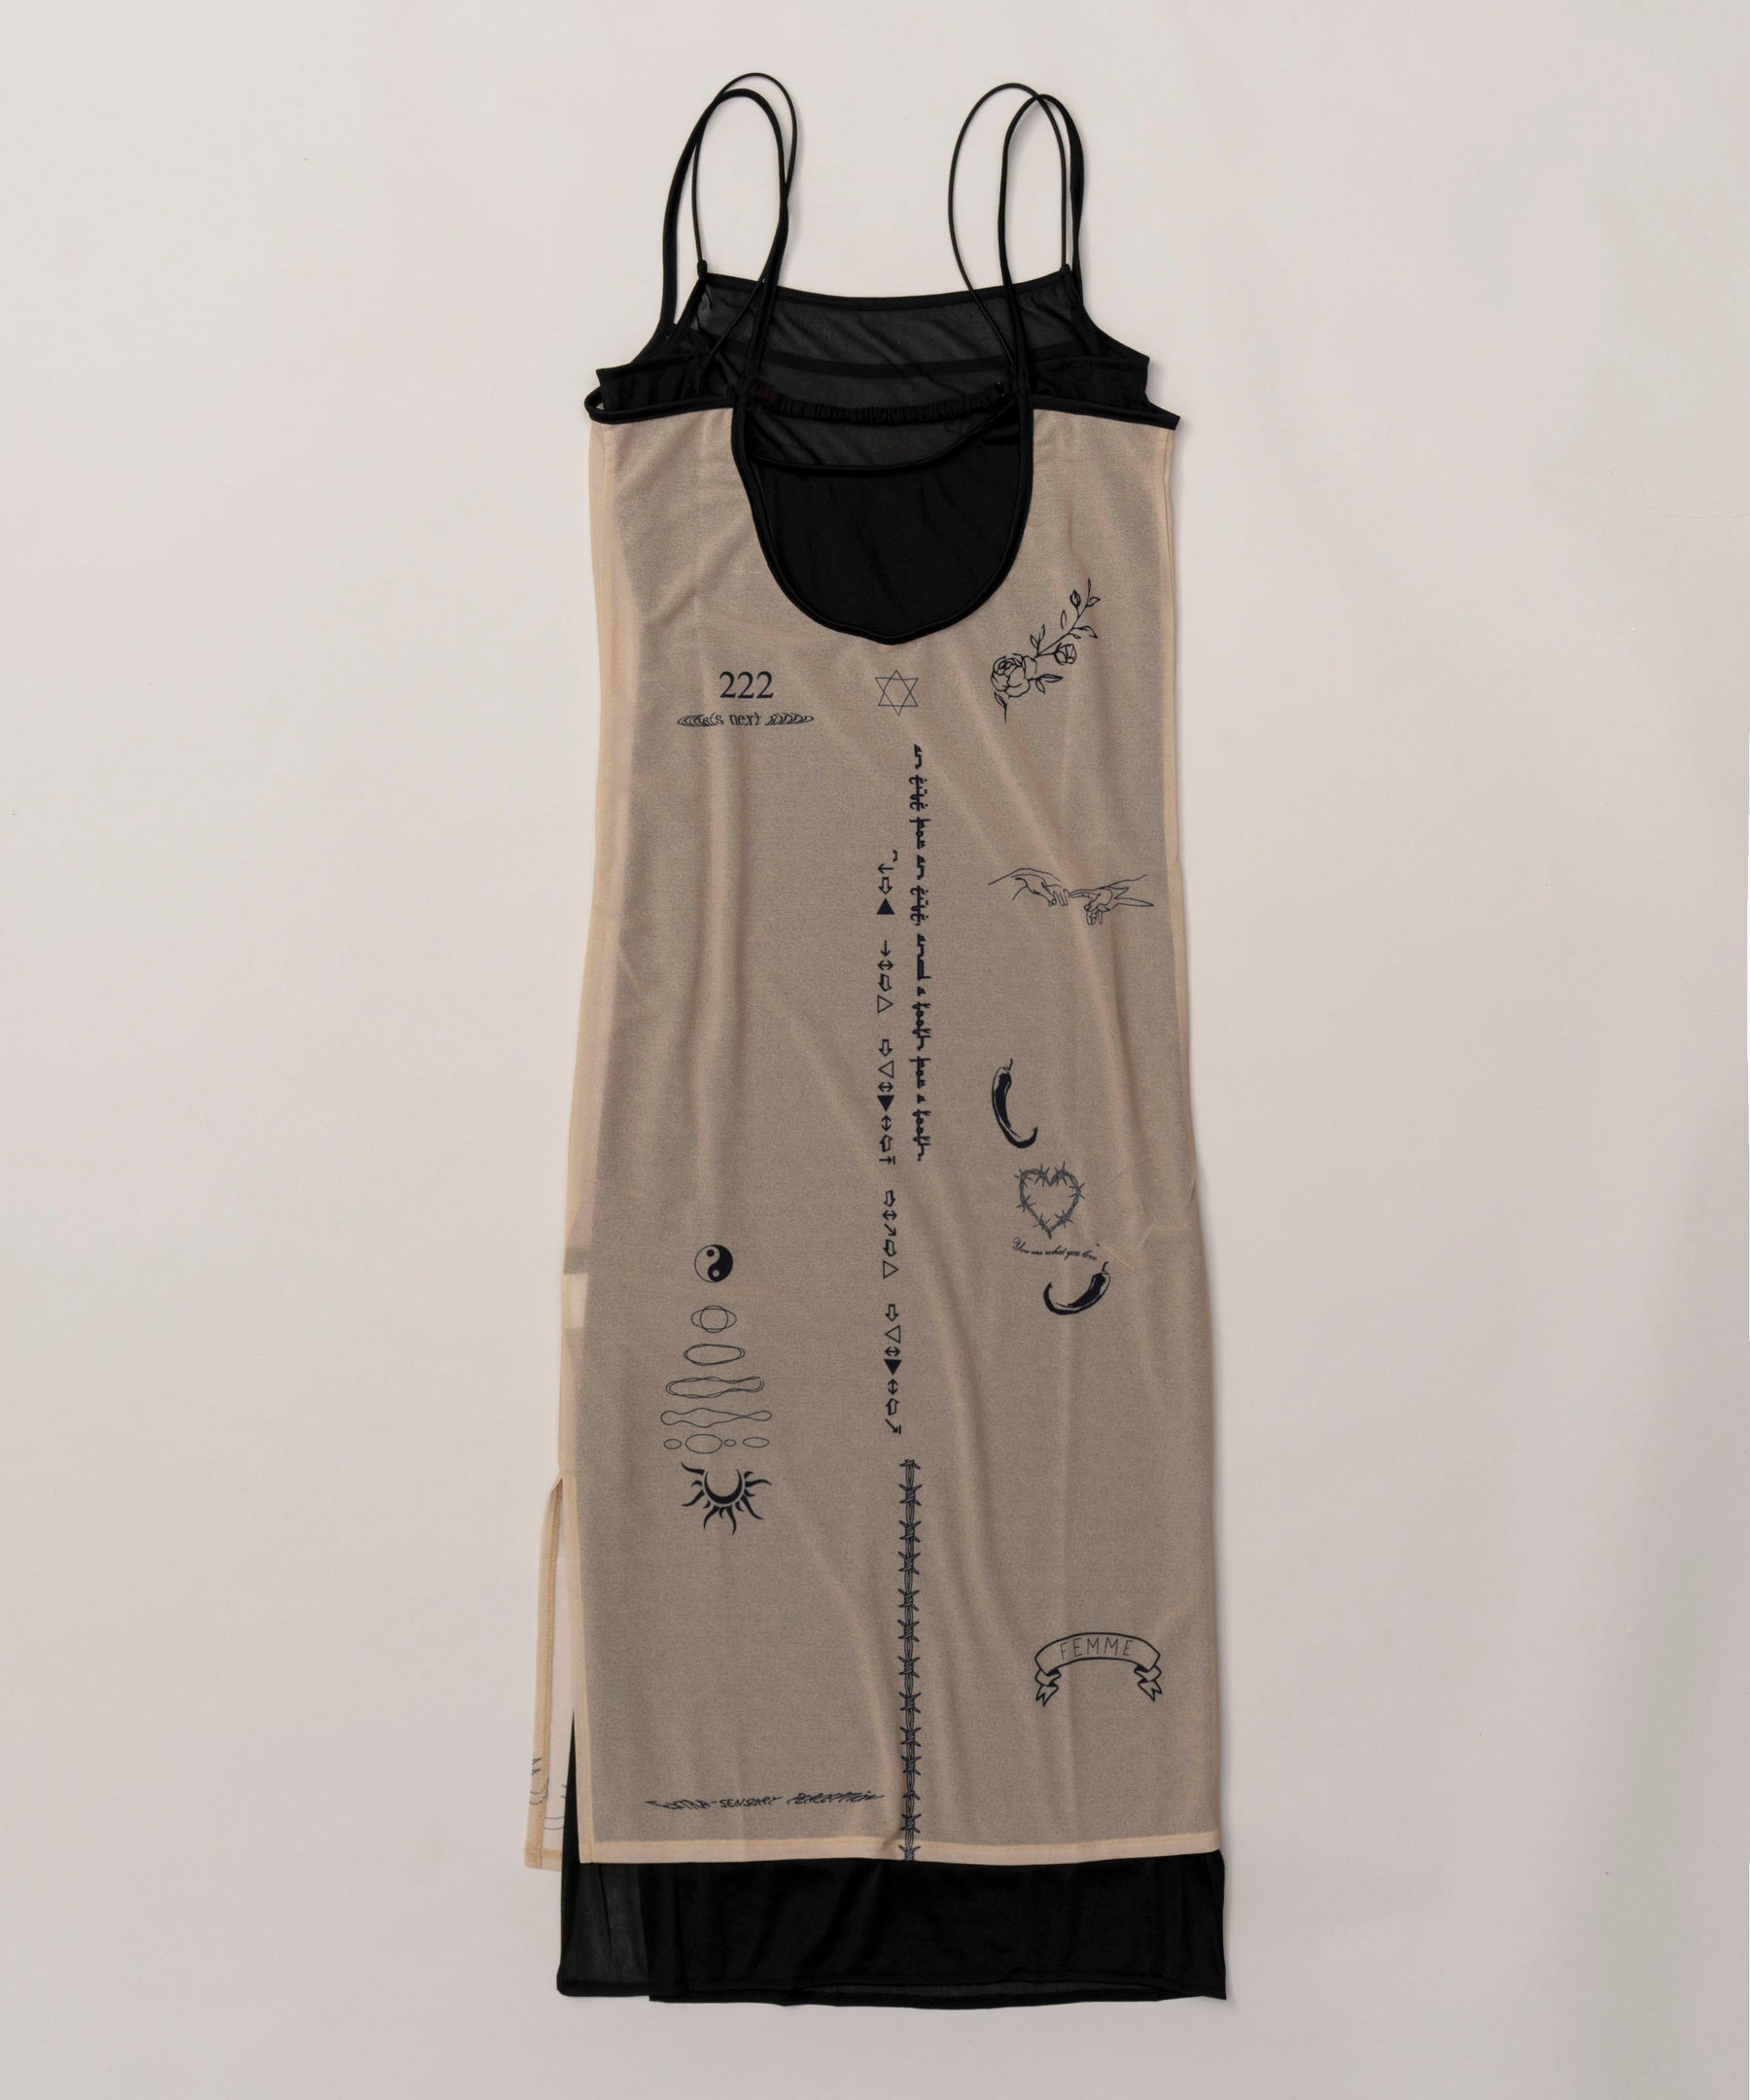 【SALE】Tatoo Print Sheer Camisole Onepiece